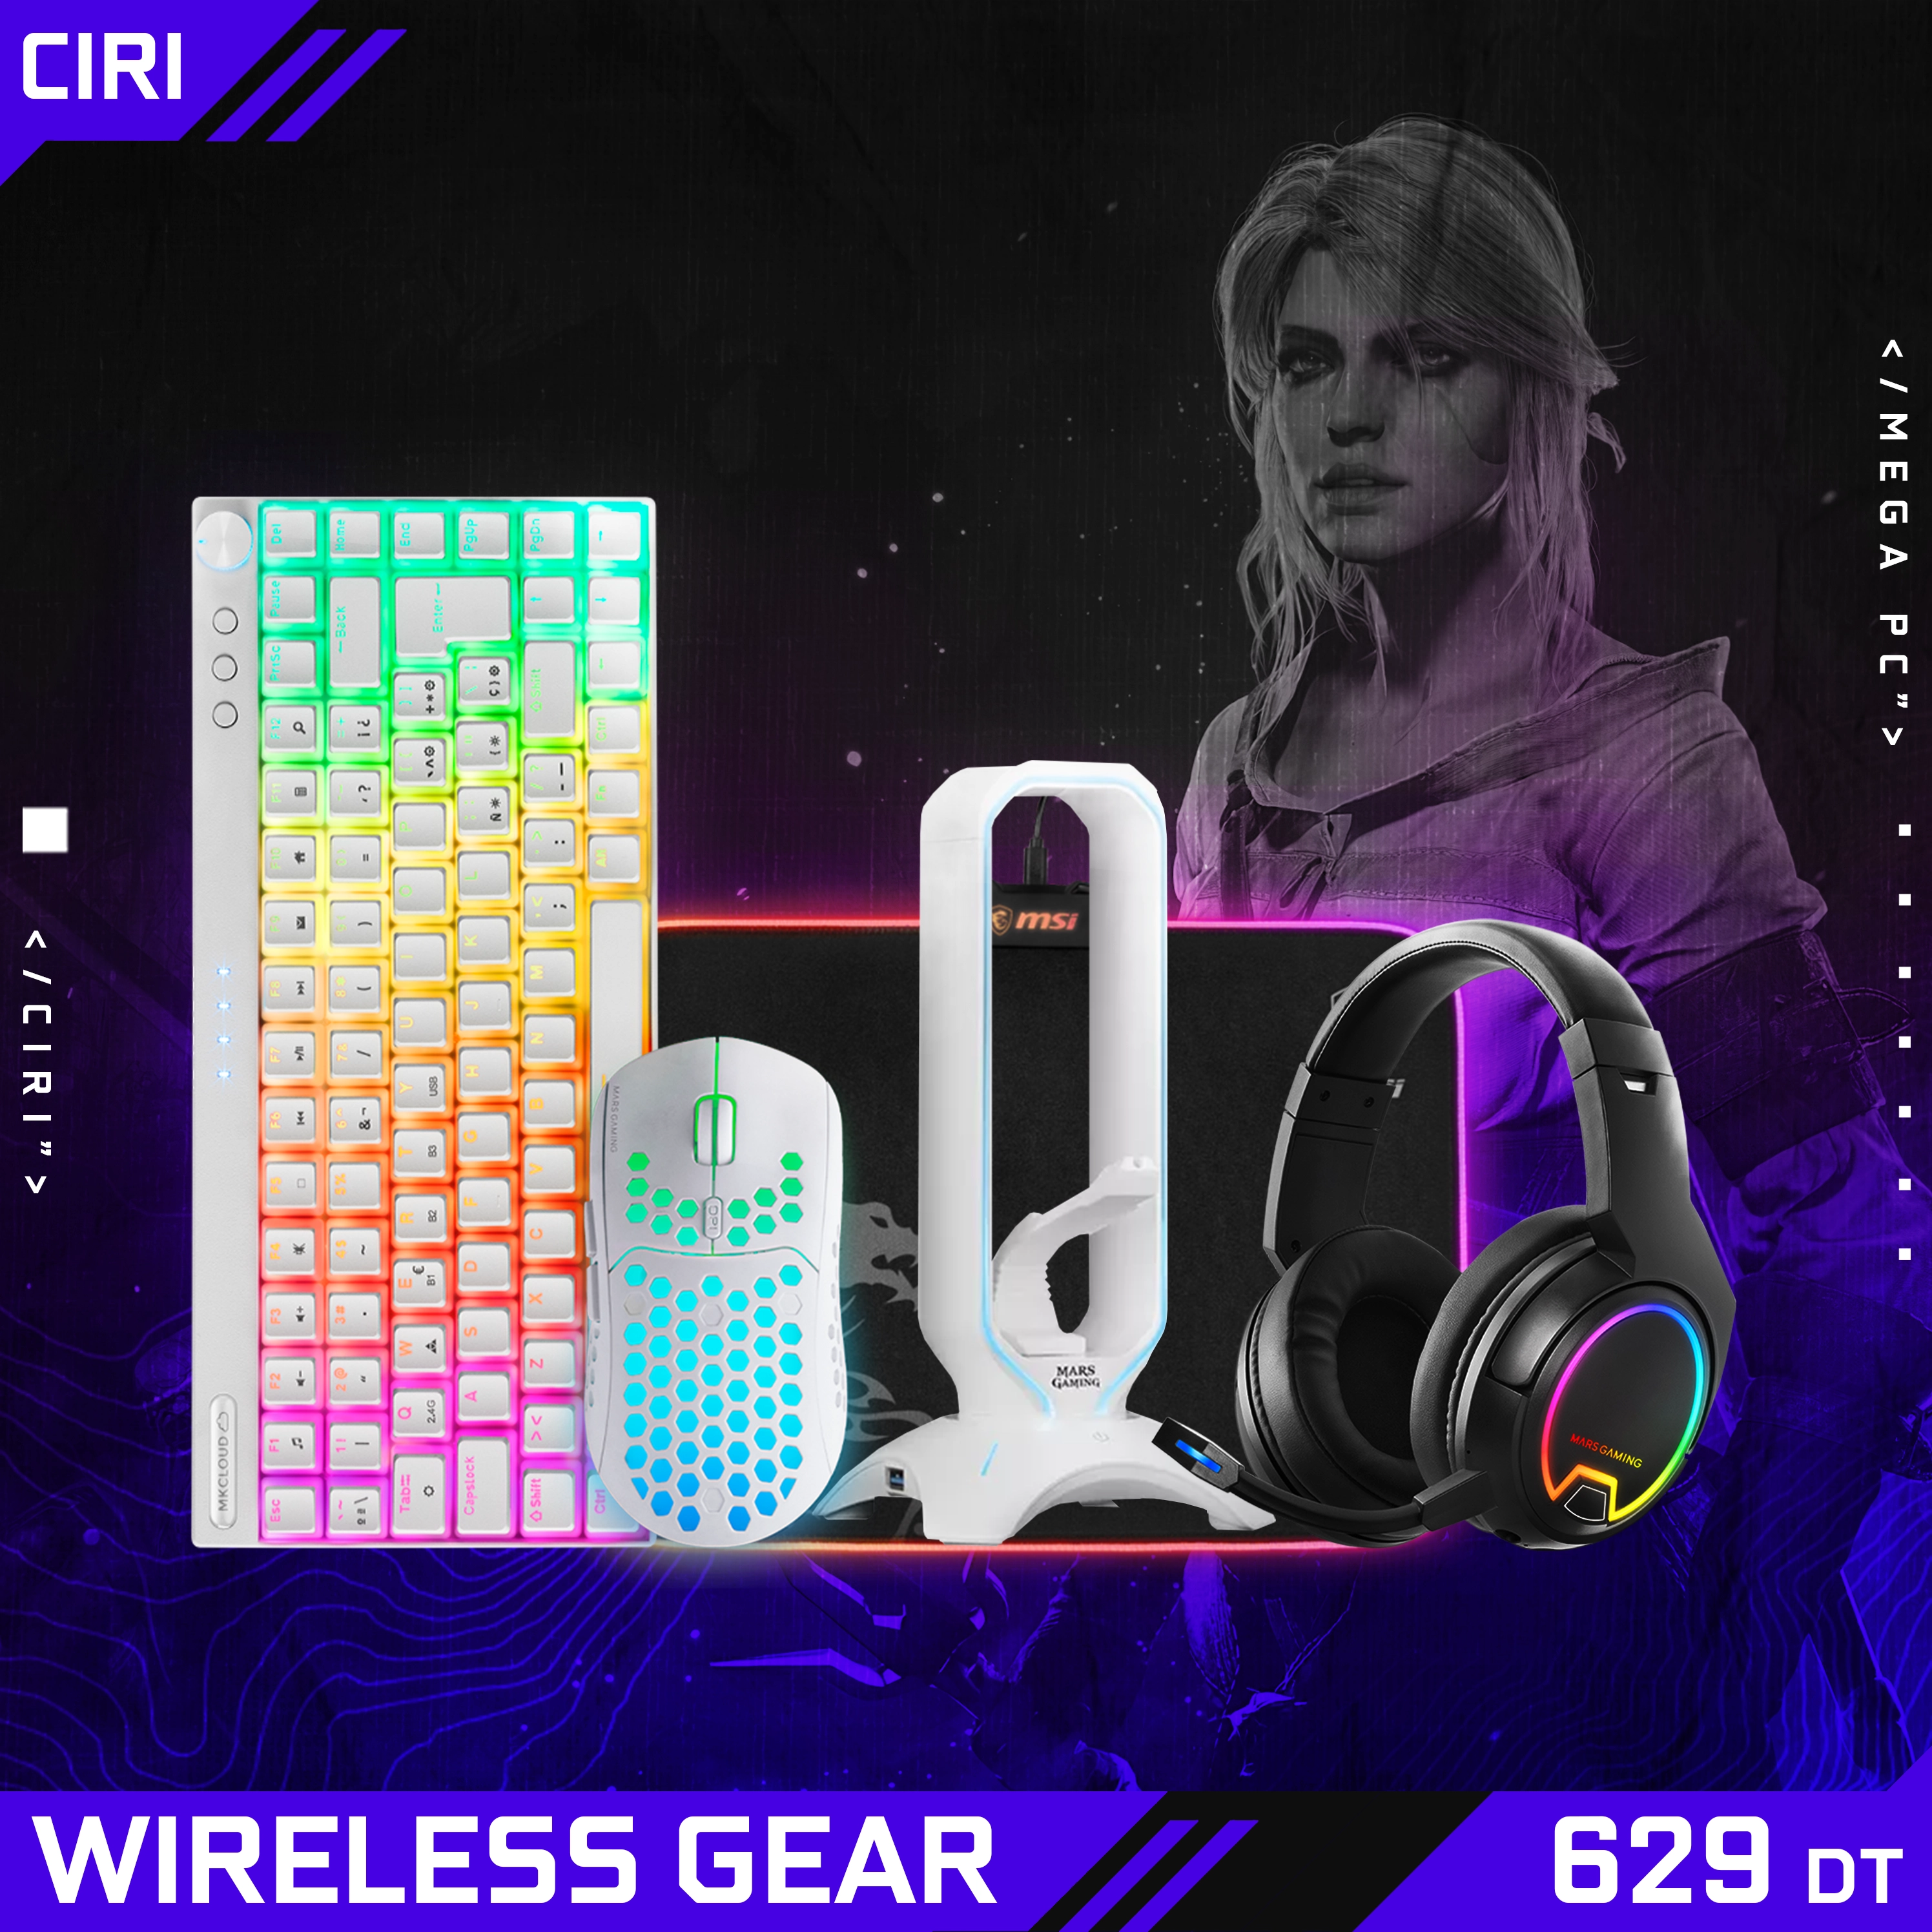 Wireless Gear: CIRI